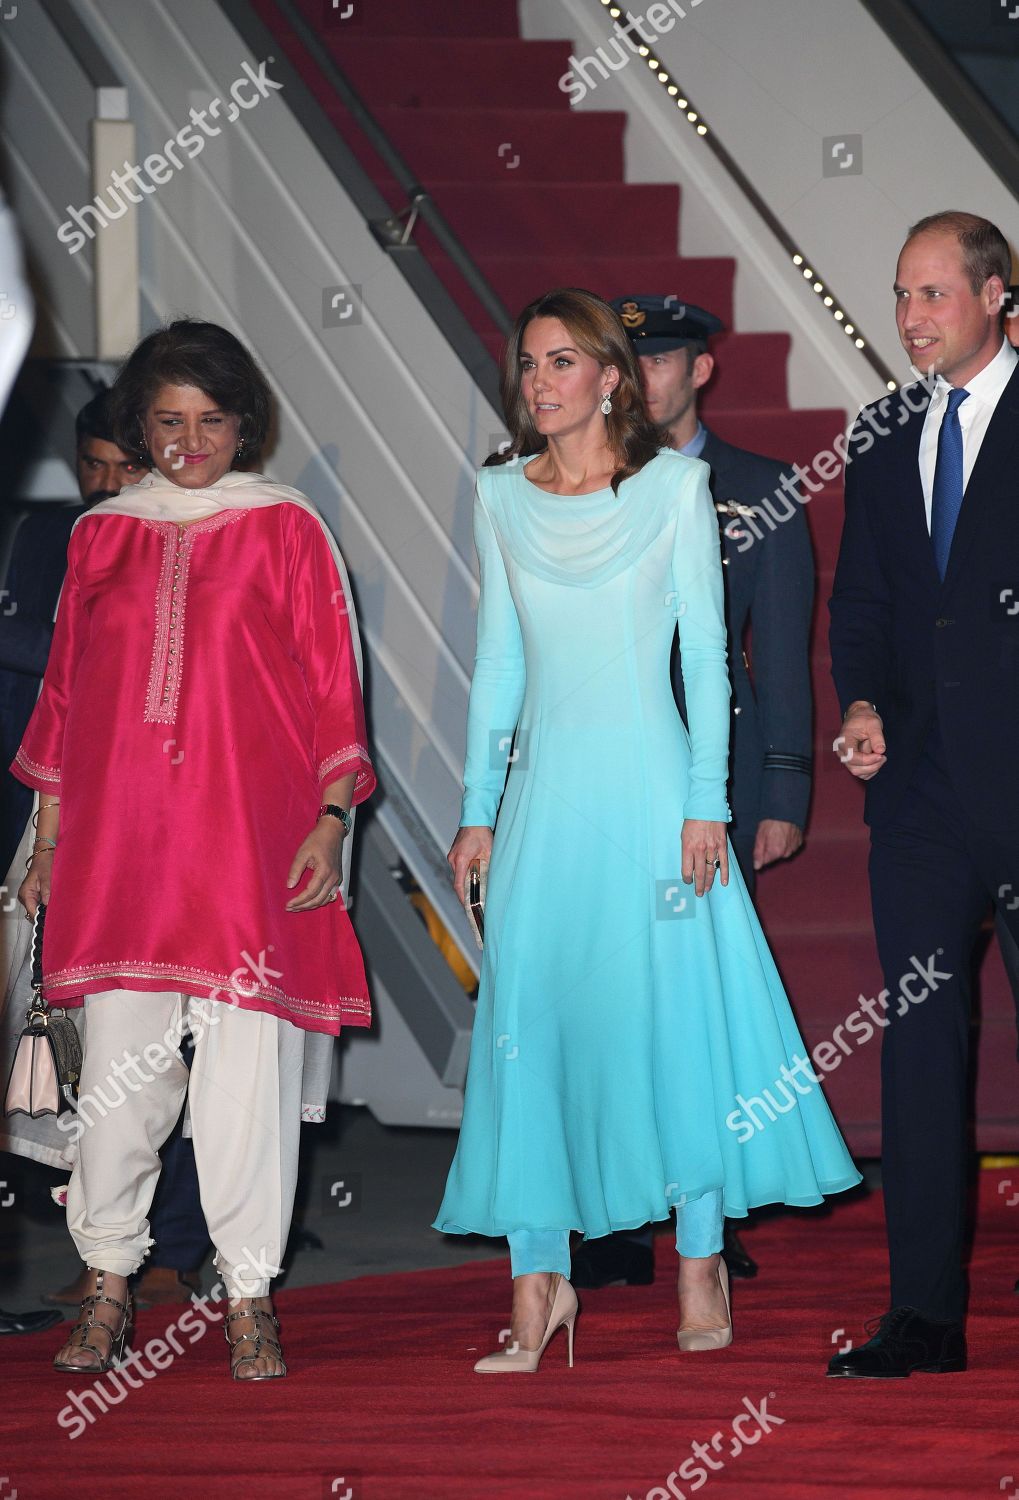 the-duke-and-duchess-of-cambridge-visit-pakistan-shutterstock-editorial-10444131a.jpg